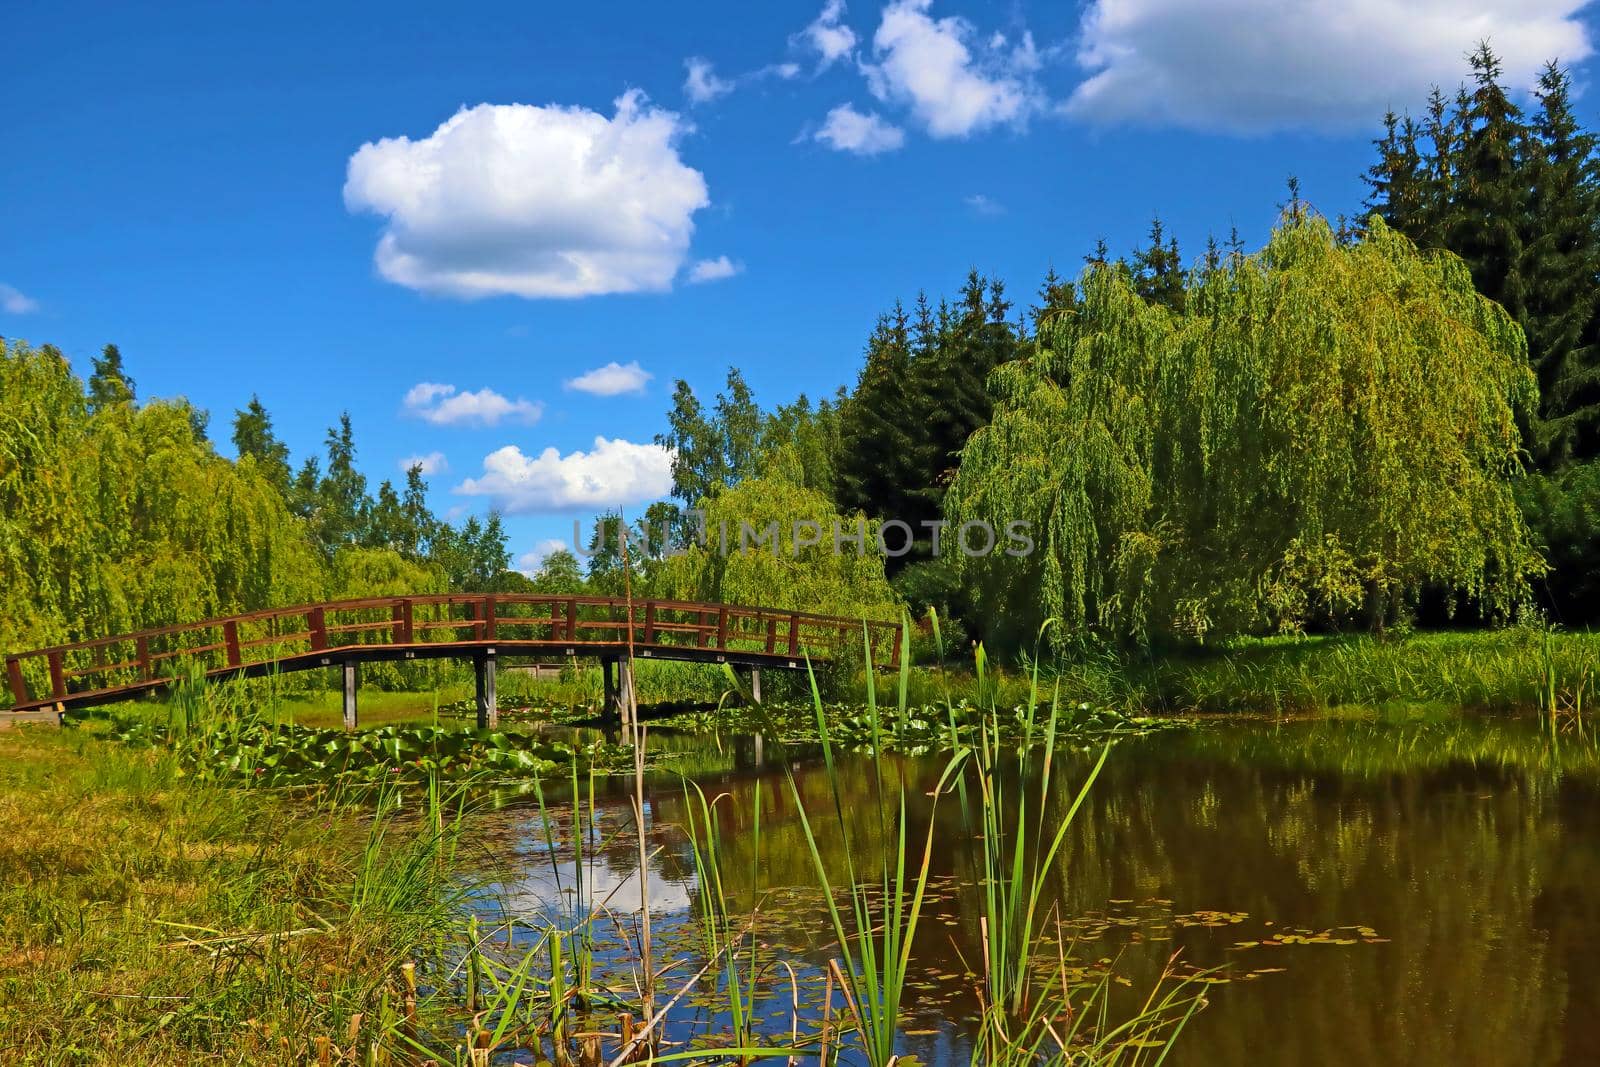 A beautiful wooden walkway across the lake